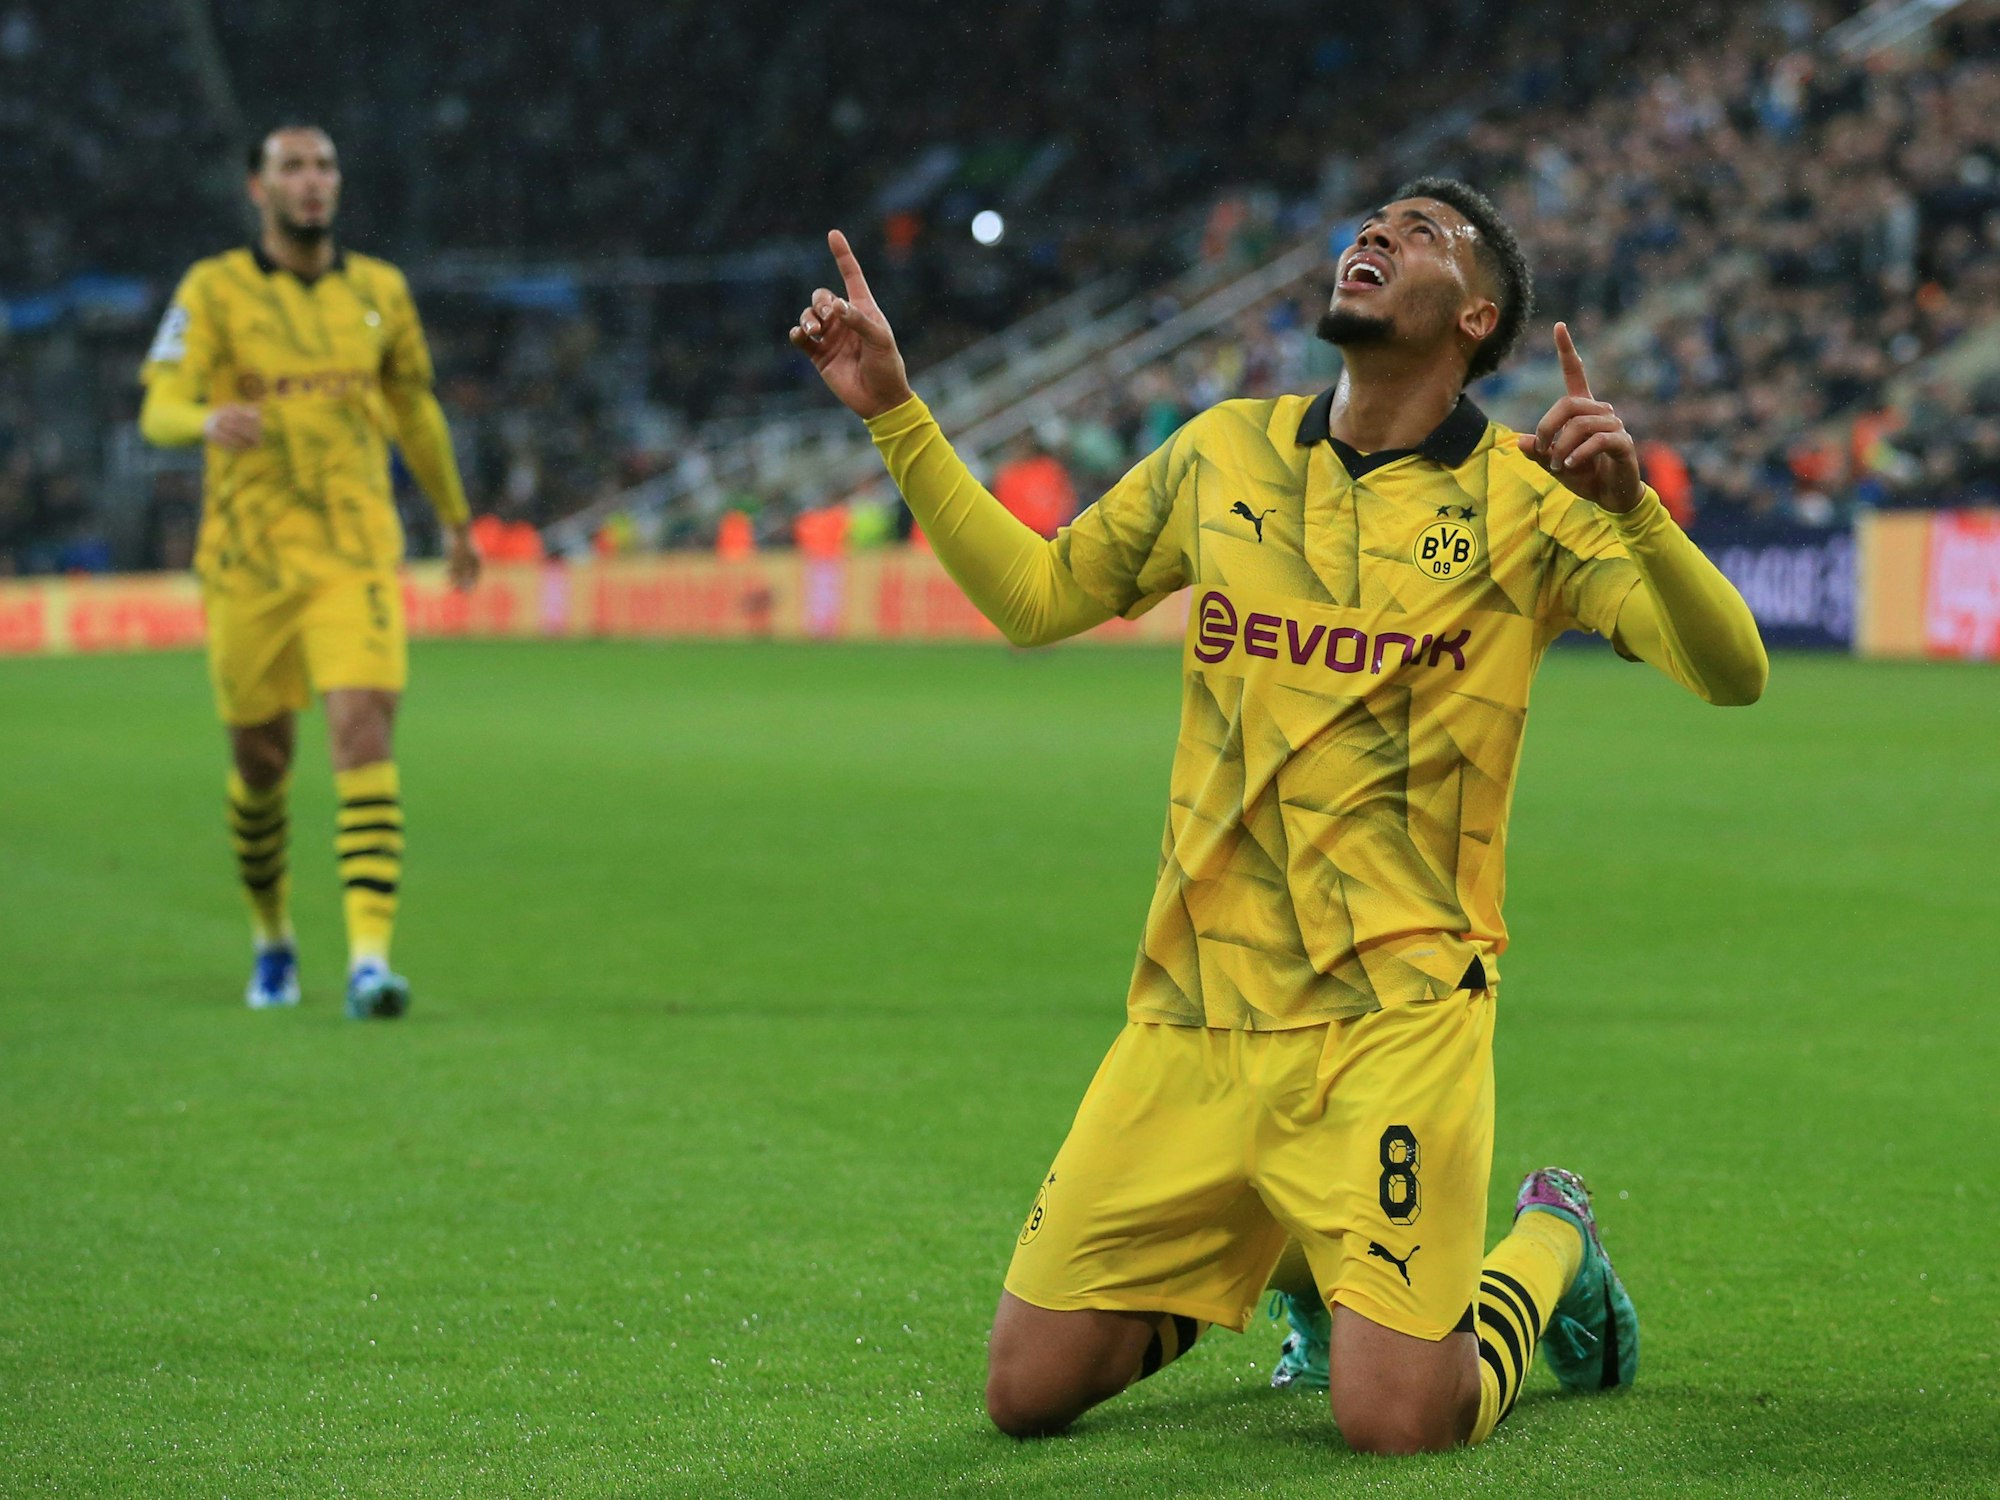 Fußball: Champions League, Newcastle United gegen Borussia Dortmund. Dortmunds Felix Nmecha jubelt nach seinem Tor zum 0:1.